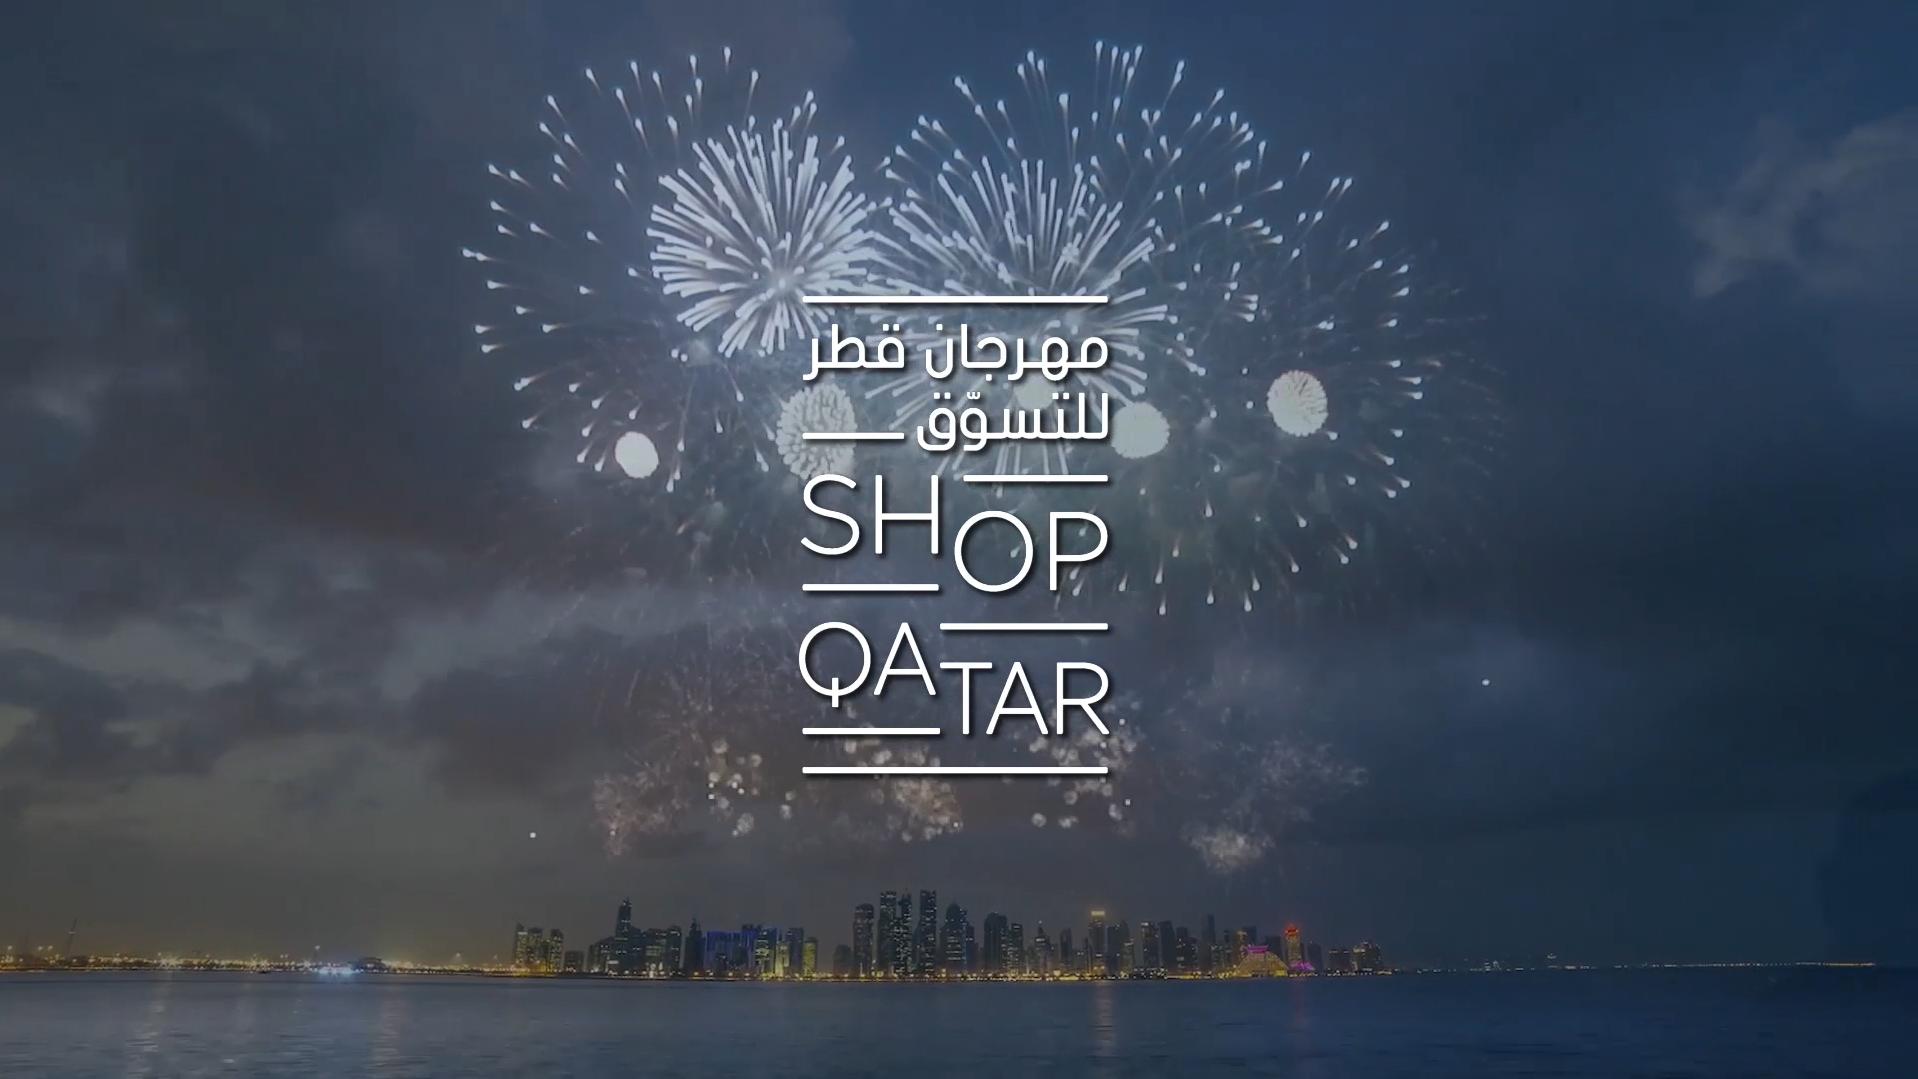 Image of "Shop Qatar"